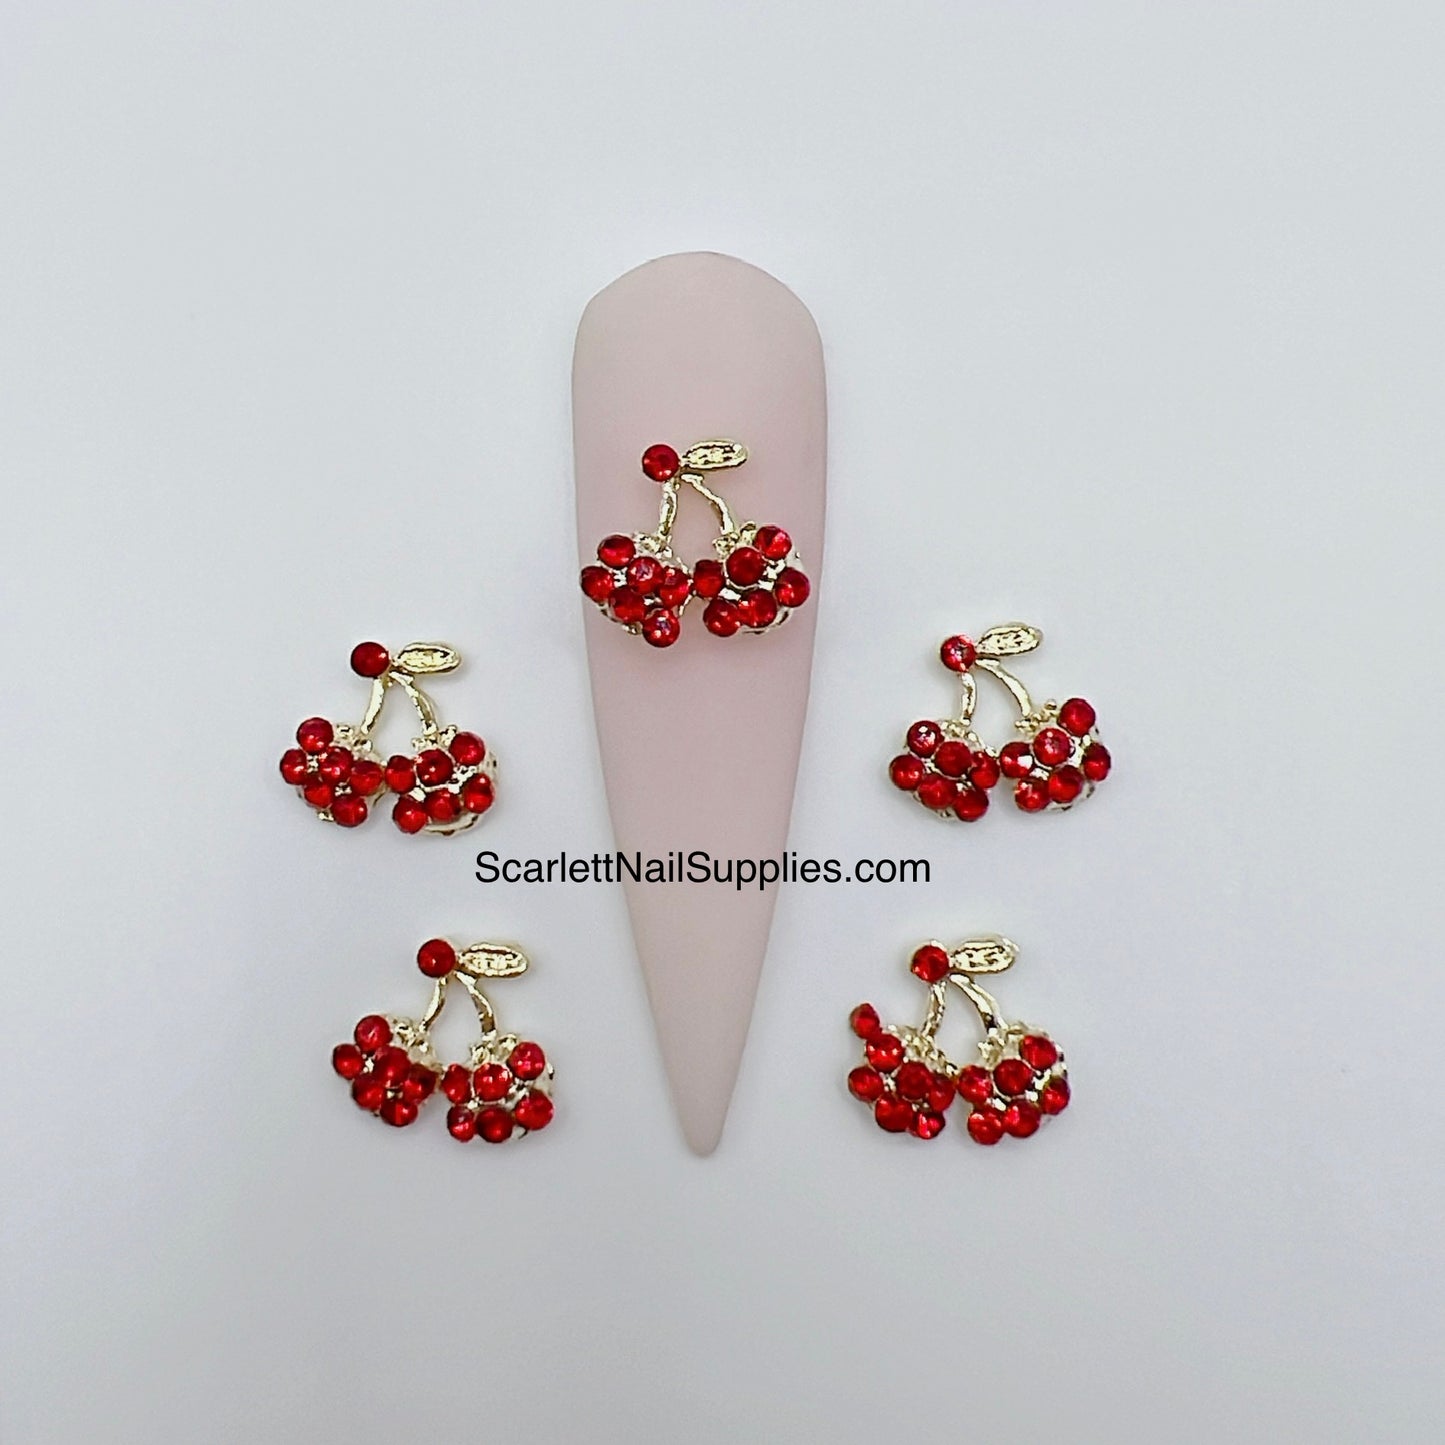 5pcs Red Cherry Metal Charm Rhinestone Nail Decorations